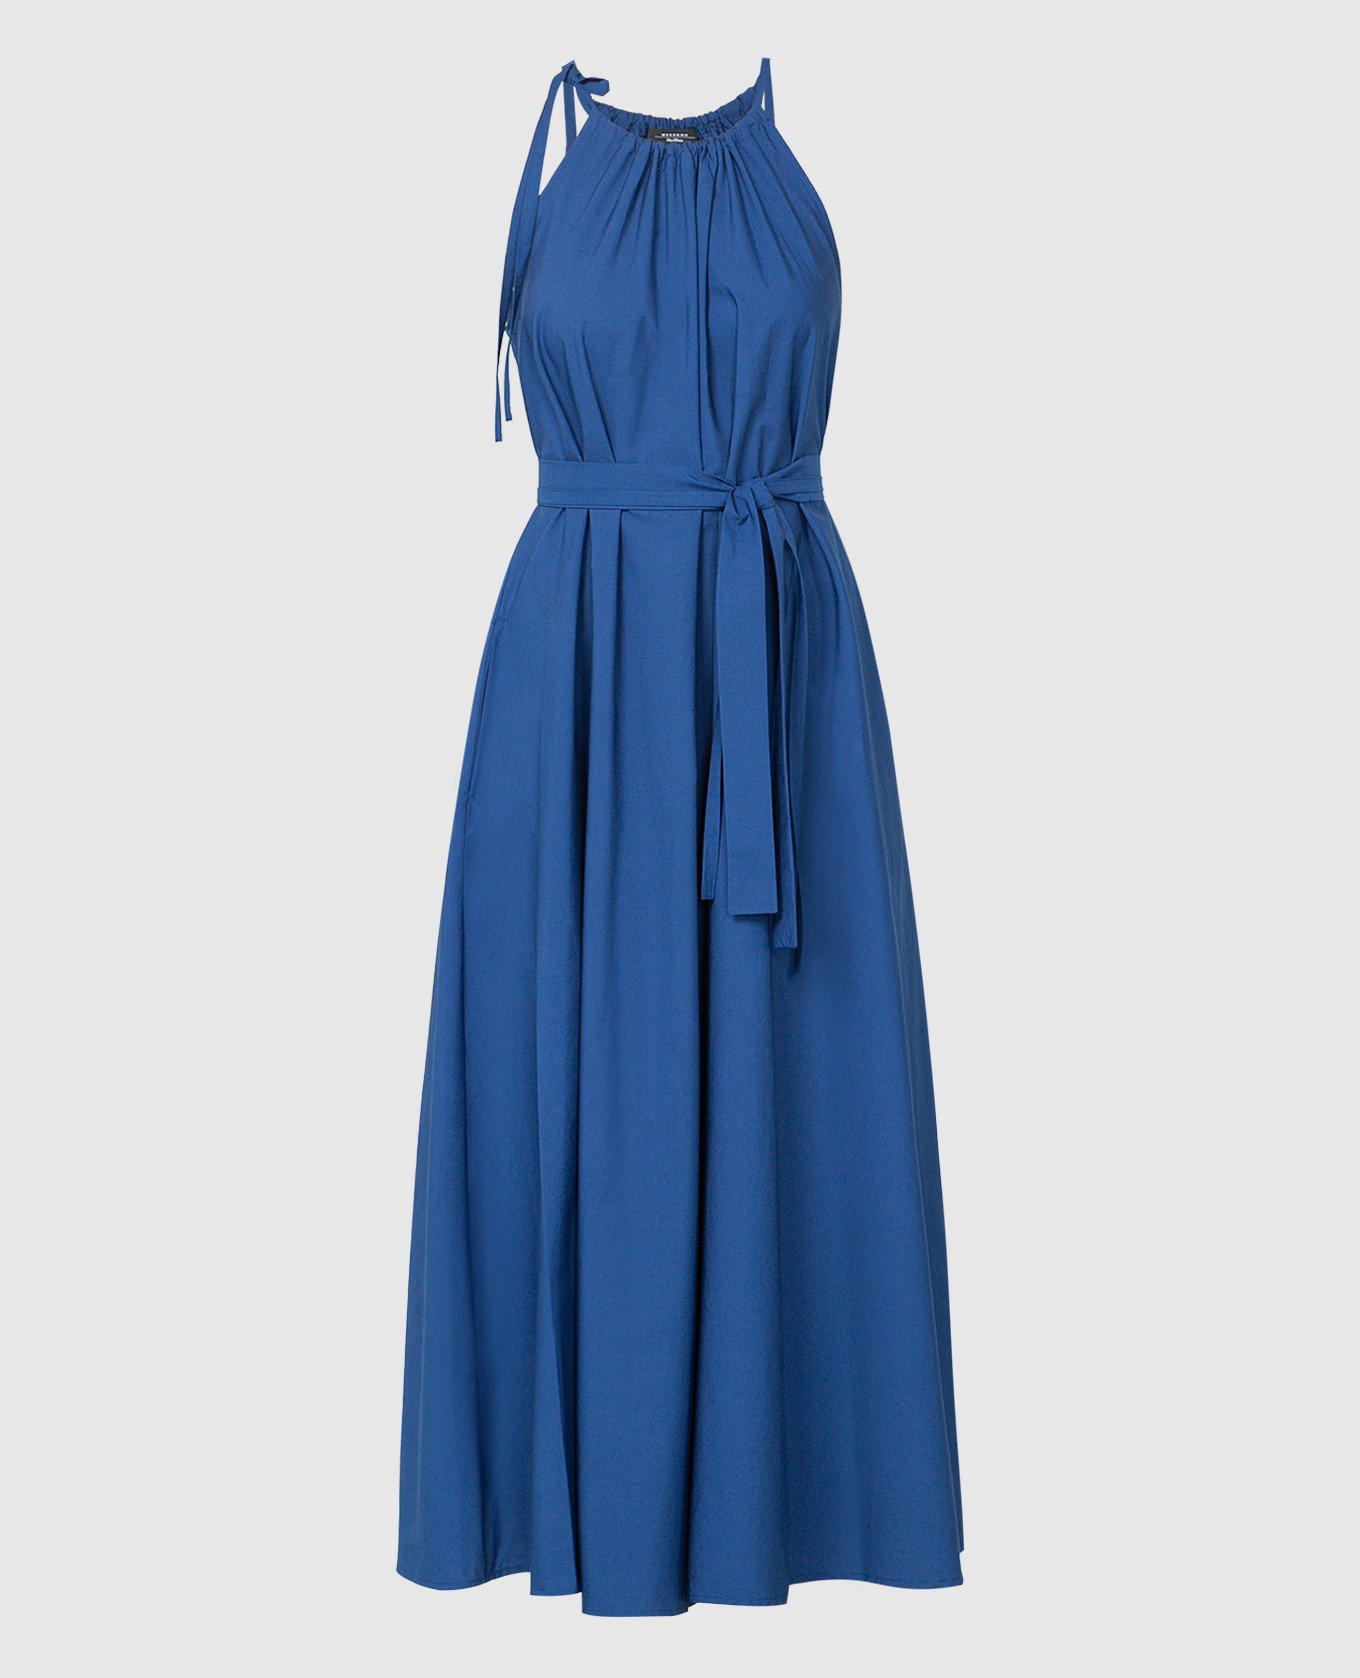 Fidato blue midi dress